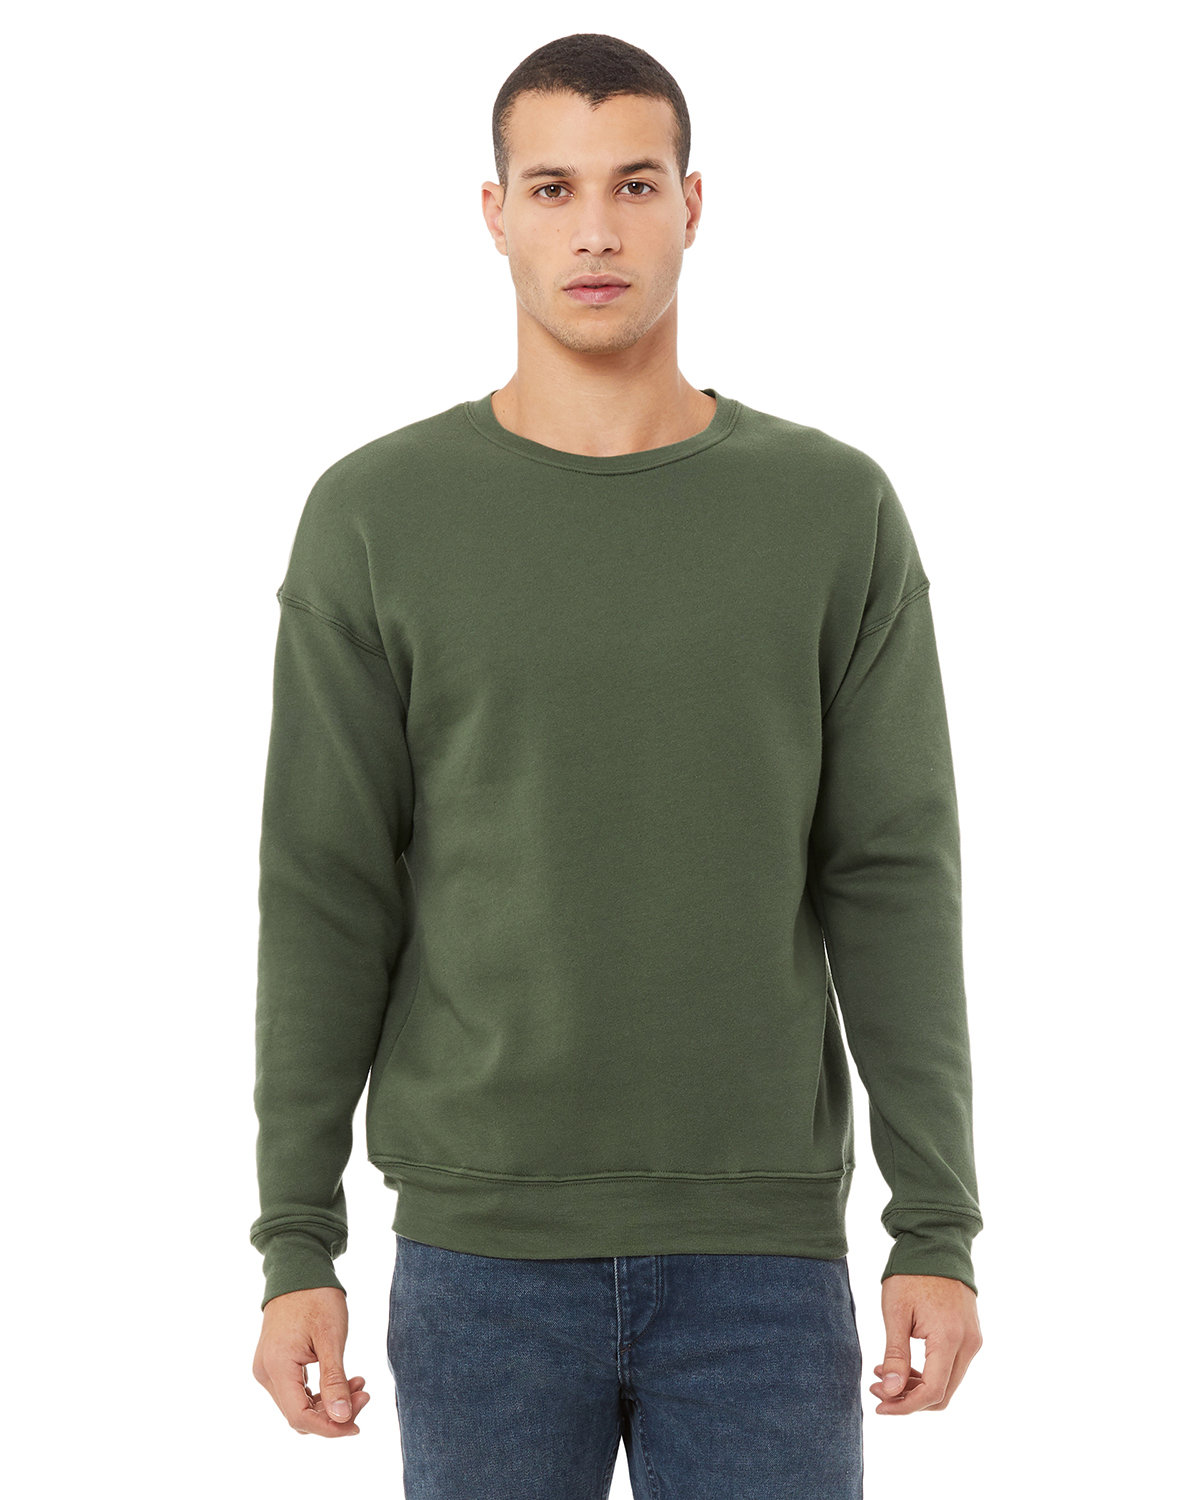 Branded Bella + Canvas Unisex Drop Shoulder Fleece Military Green